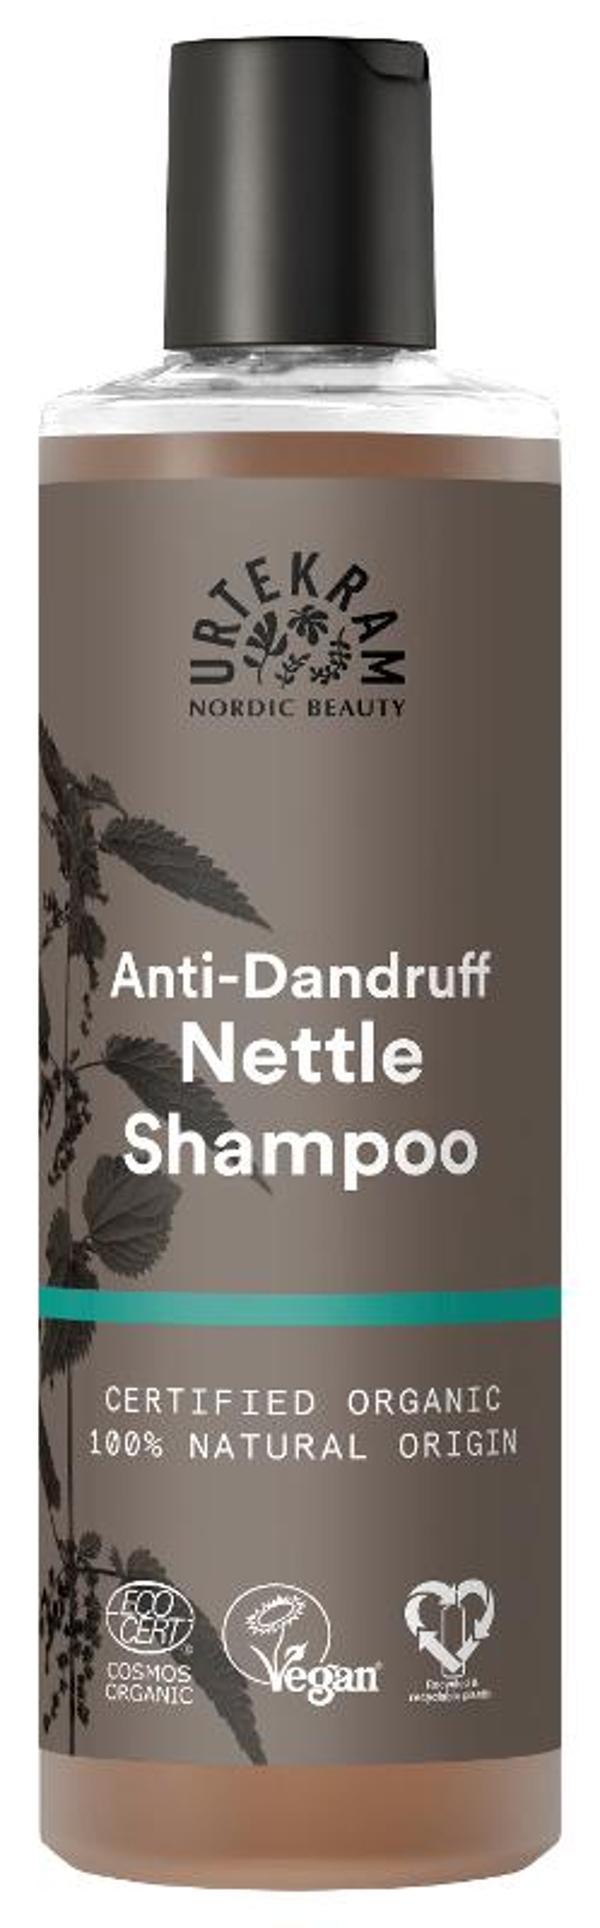 Produktfoto zu Brennessel Shampoo - 250ml